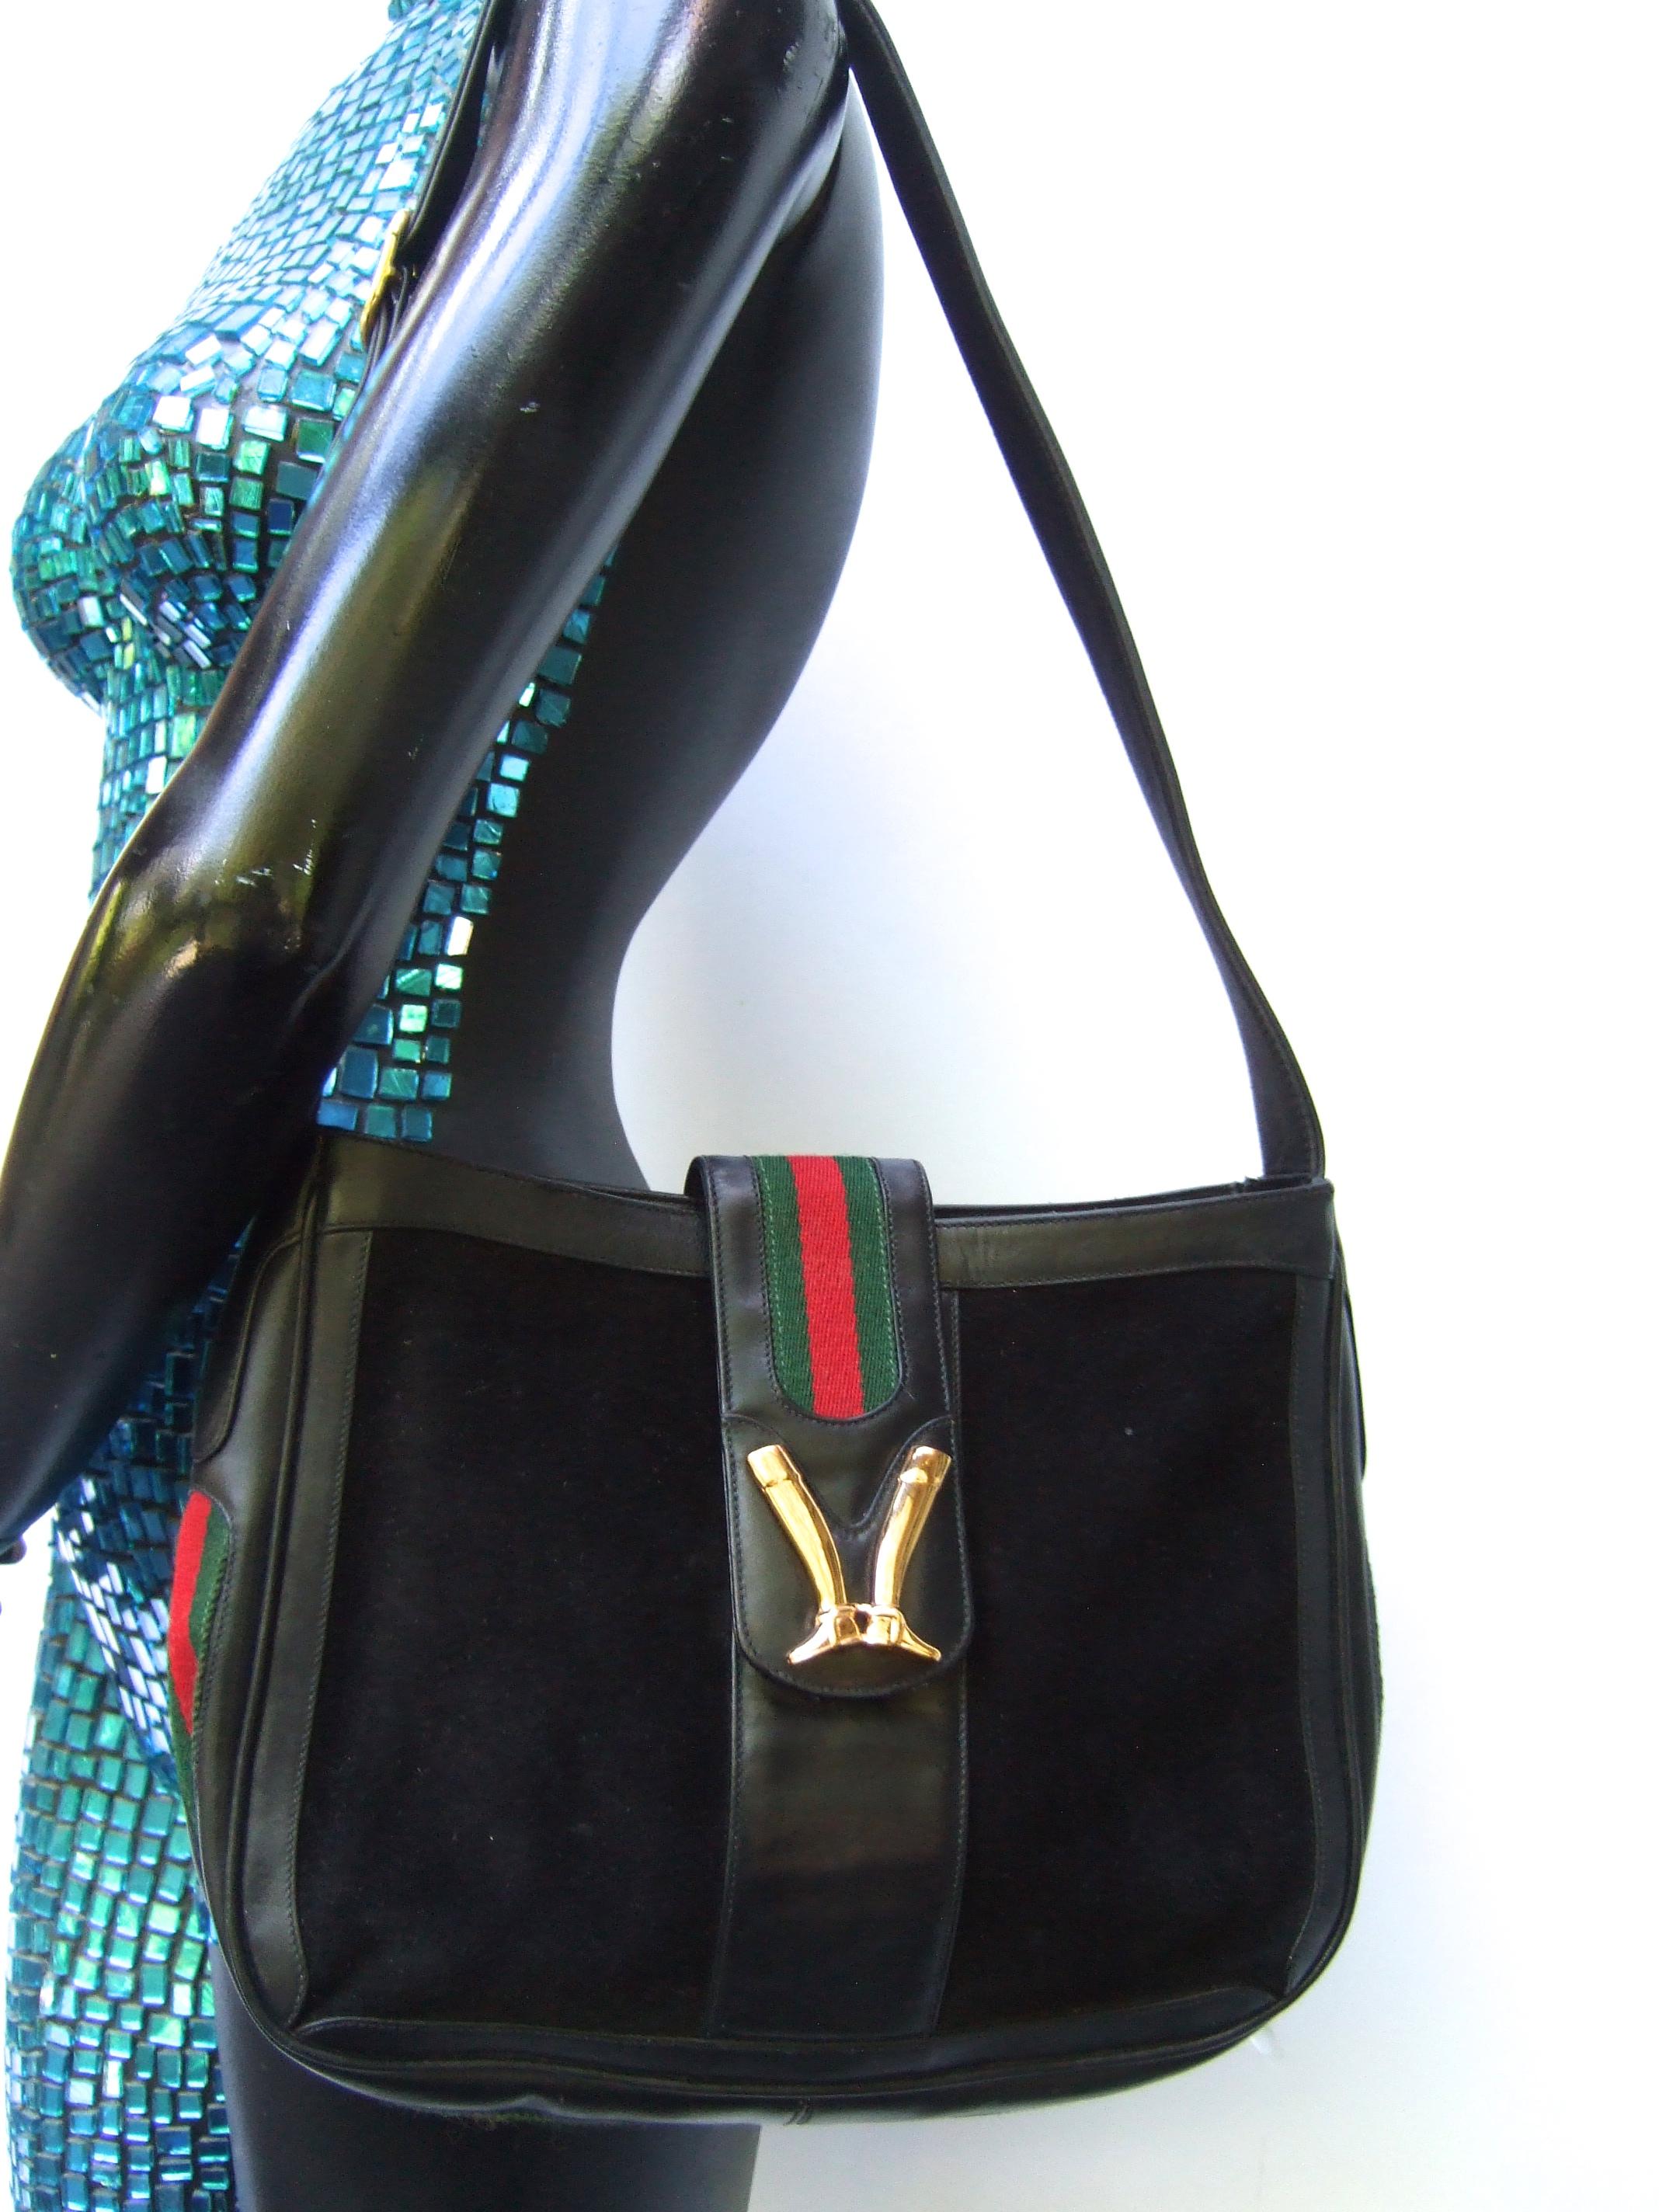 Gucci Italy Rare Black Suede Boot Emblem Shoulder Bag c 1970s For Sale 8